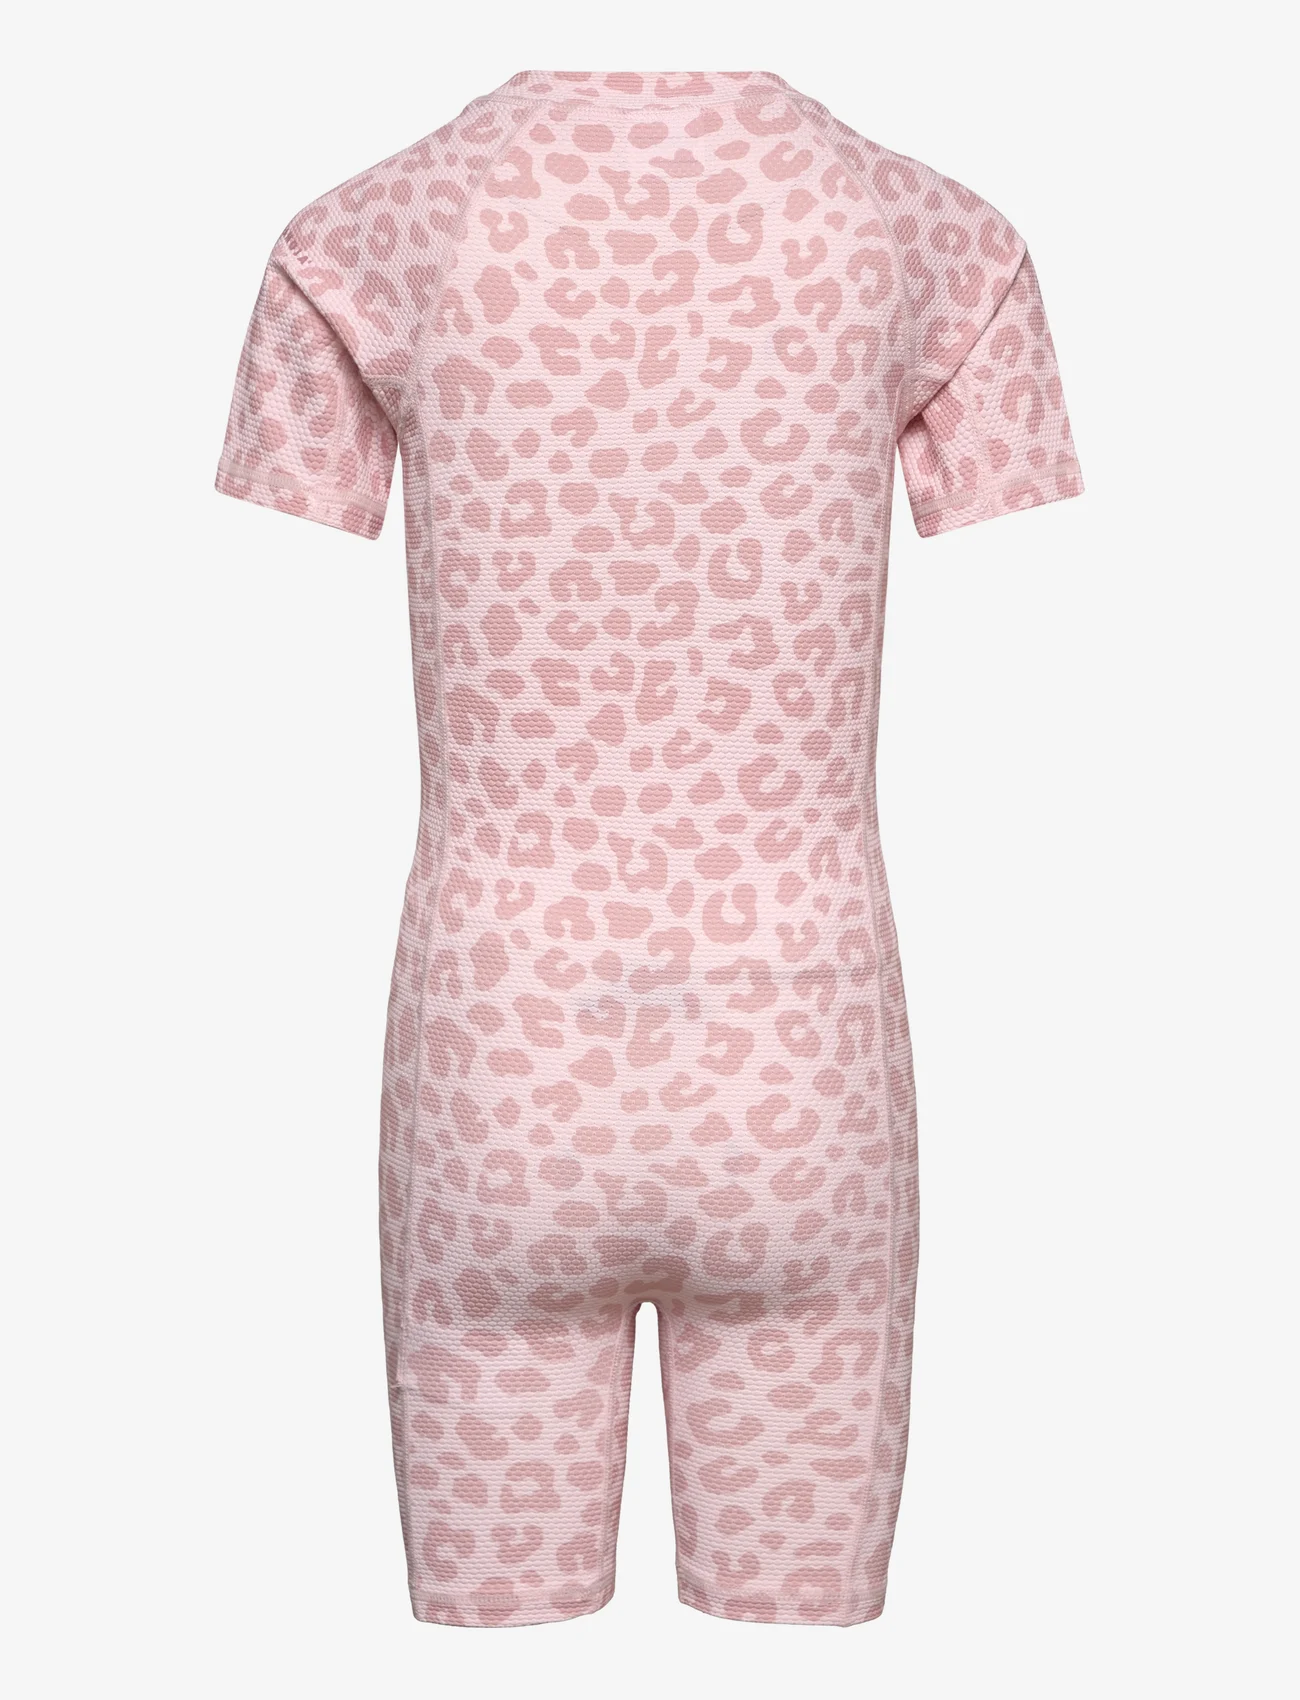 Geggamoja - UV-Suit - sommarfynd - pink leo - 1